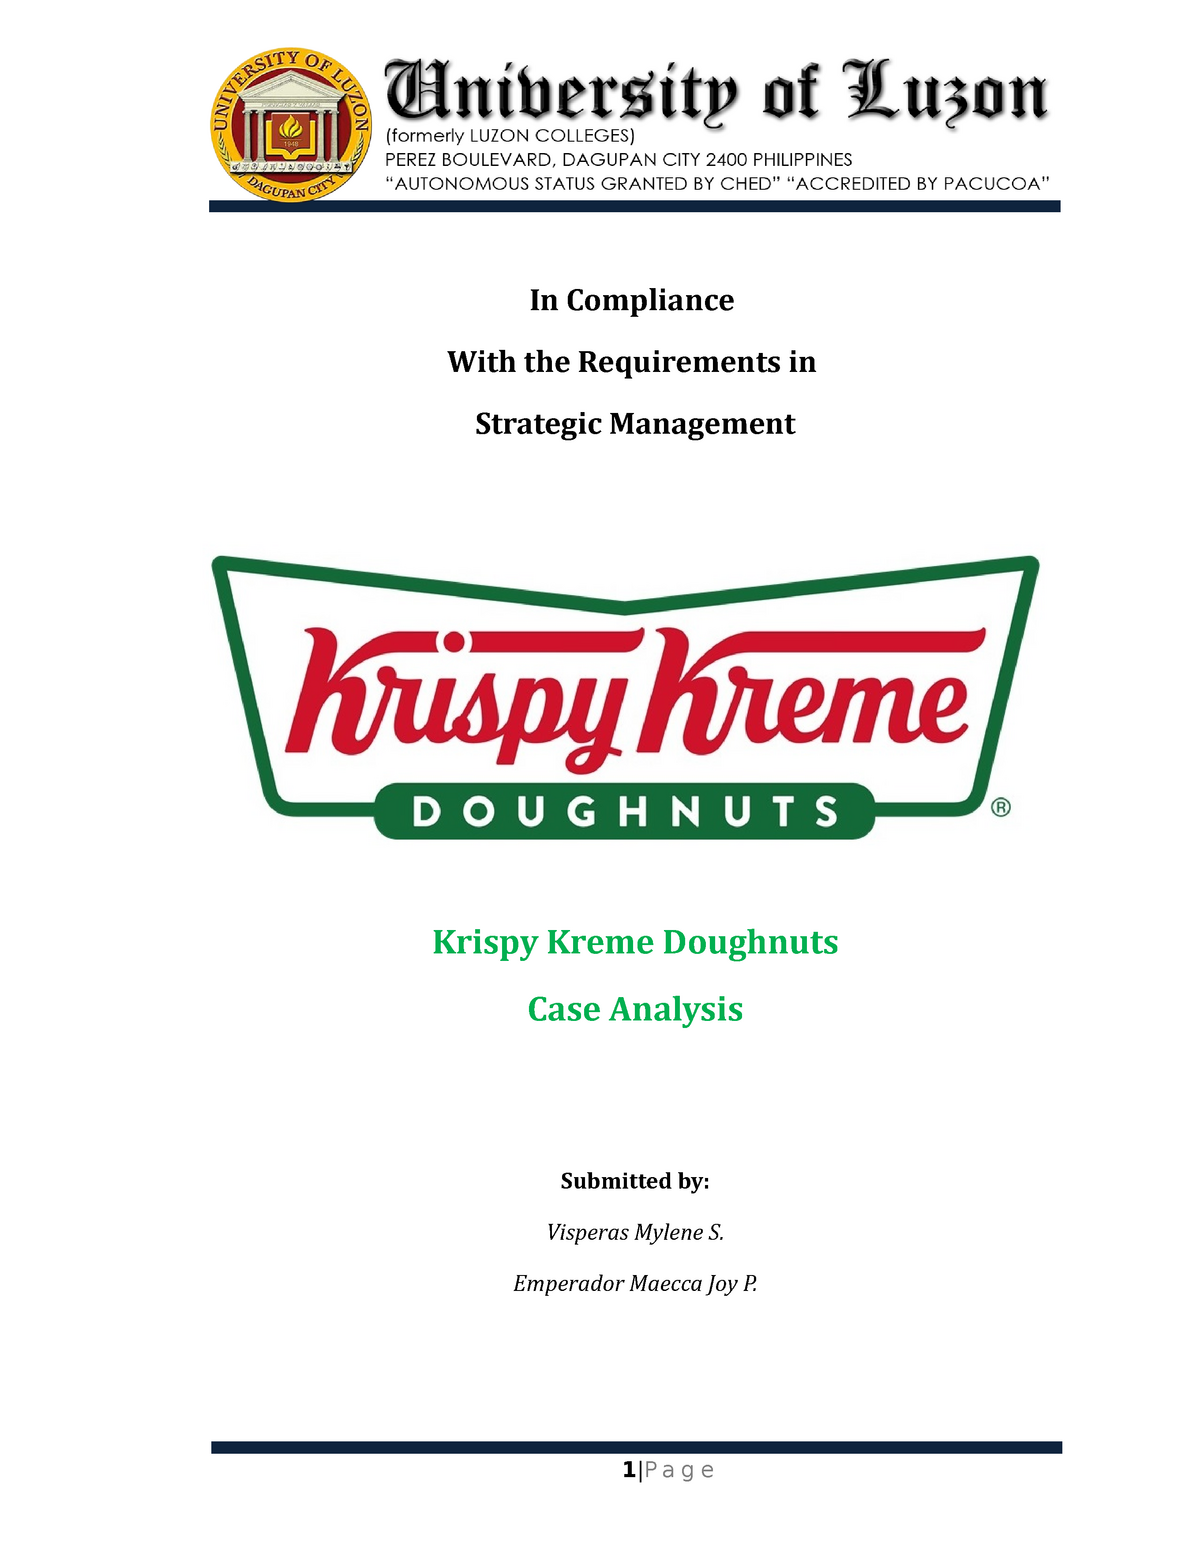 Krispy Kreme Financial Analysis